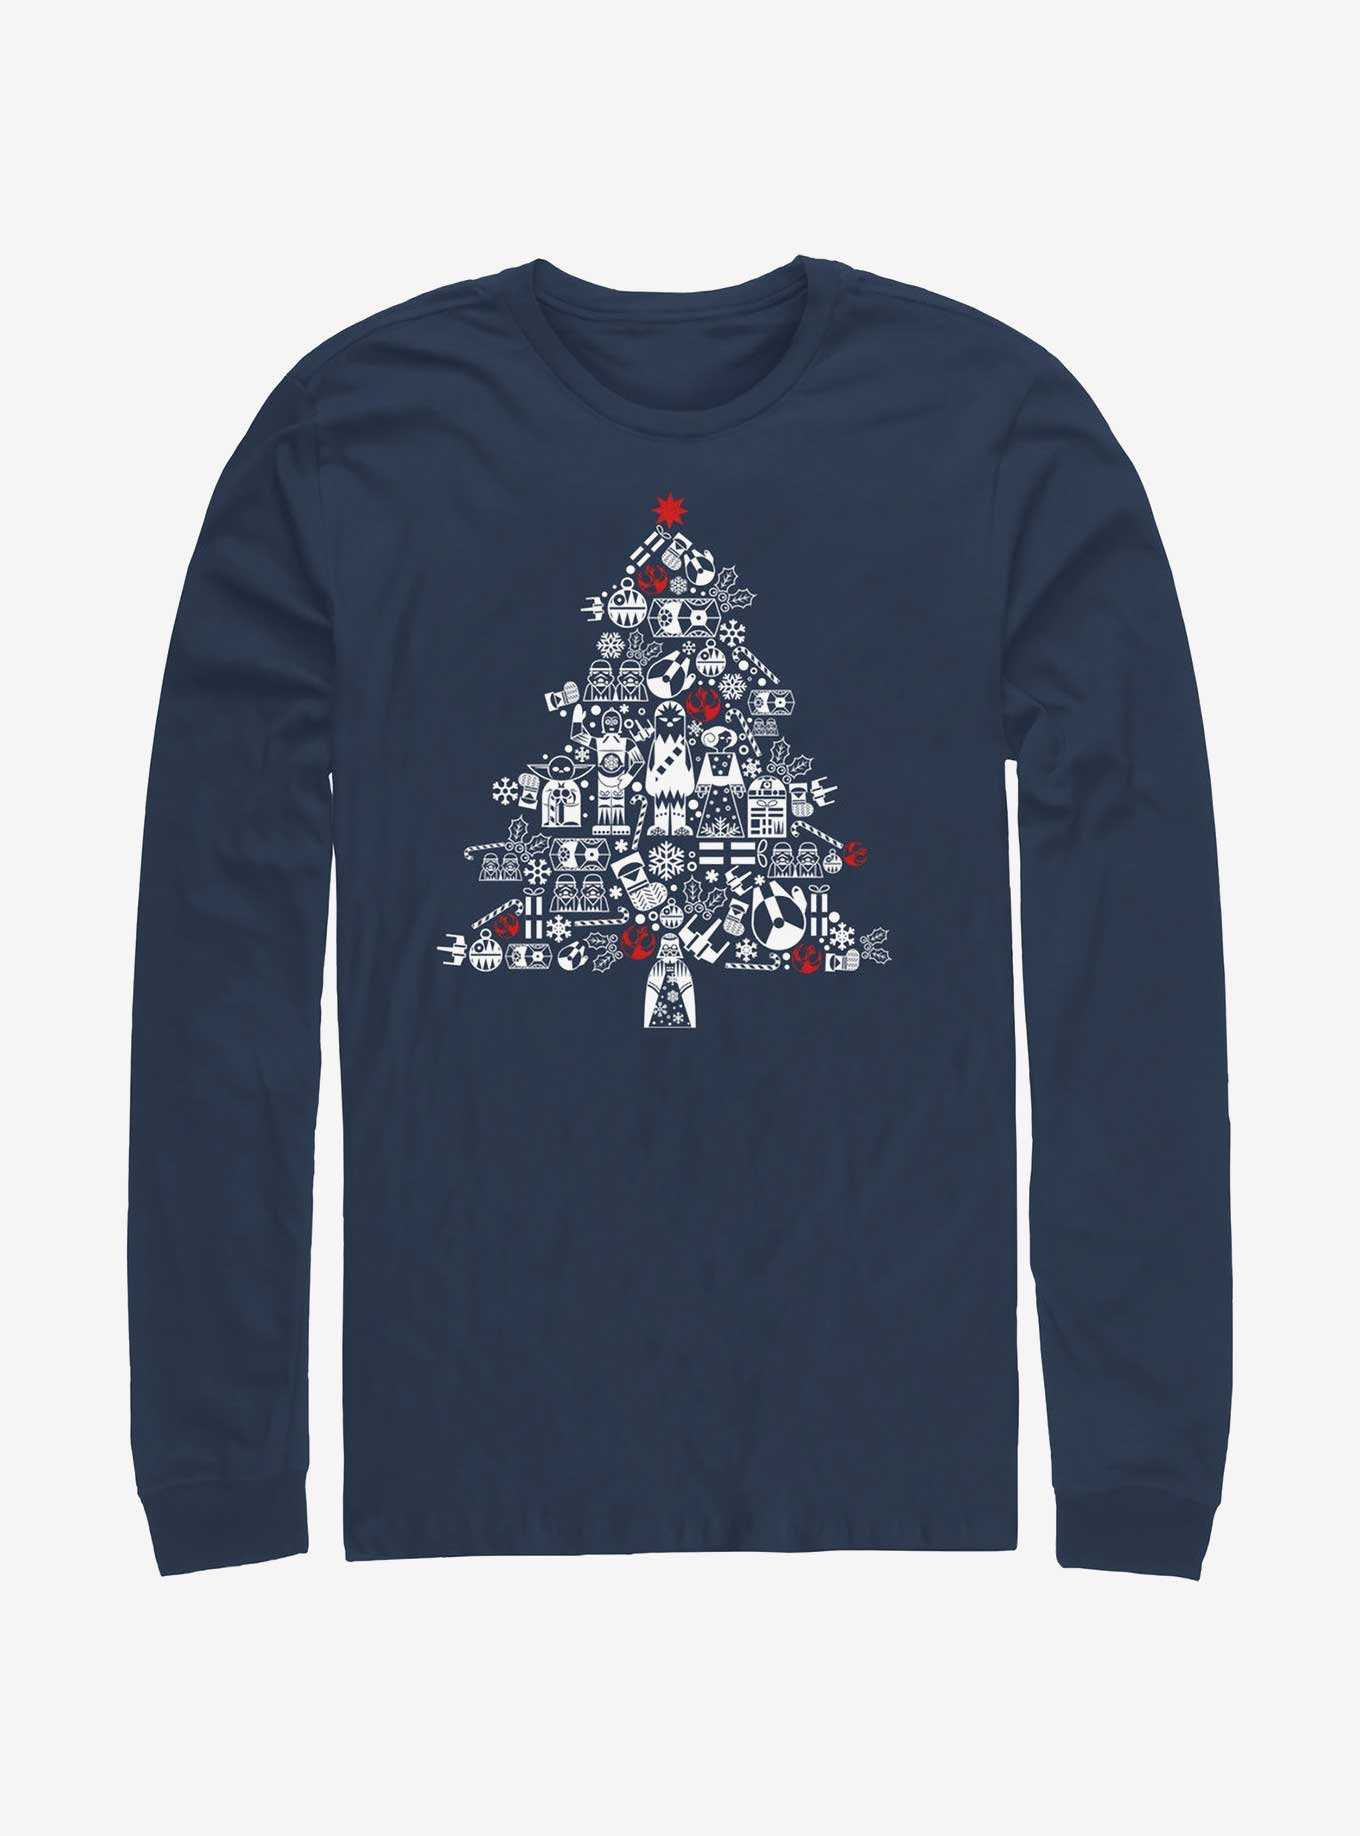 Star Wars Christmas Tree Fill Long-Sleeve T-Shirt, , hi-res